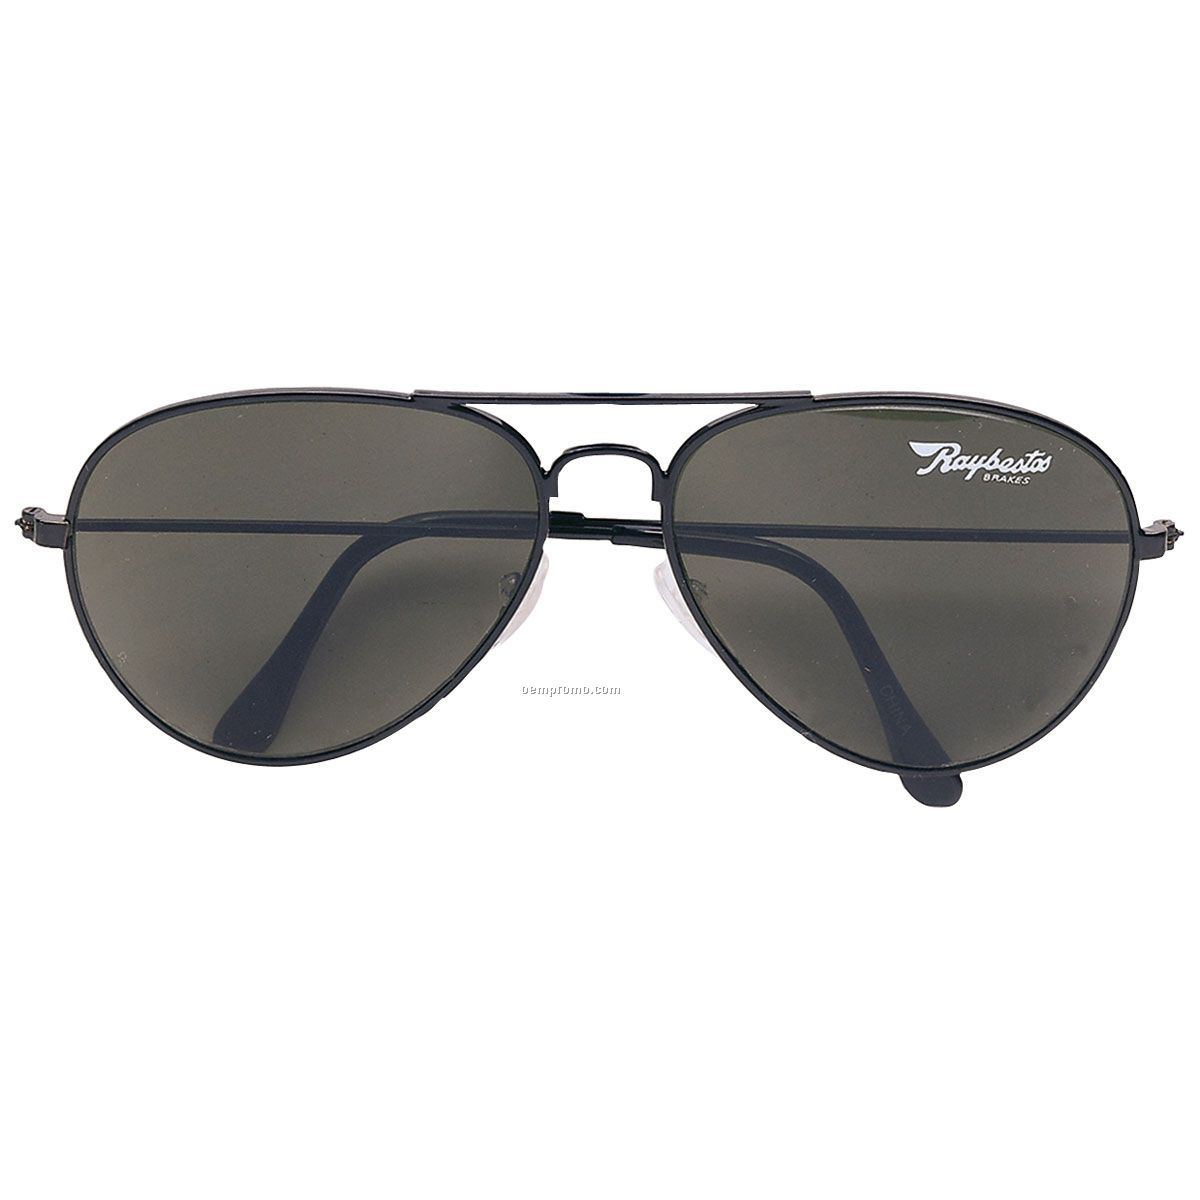 Black Metal Frame Aviator Sunglasses